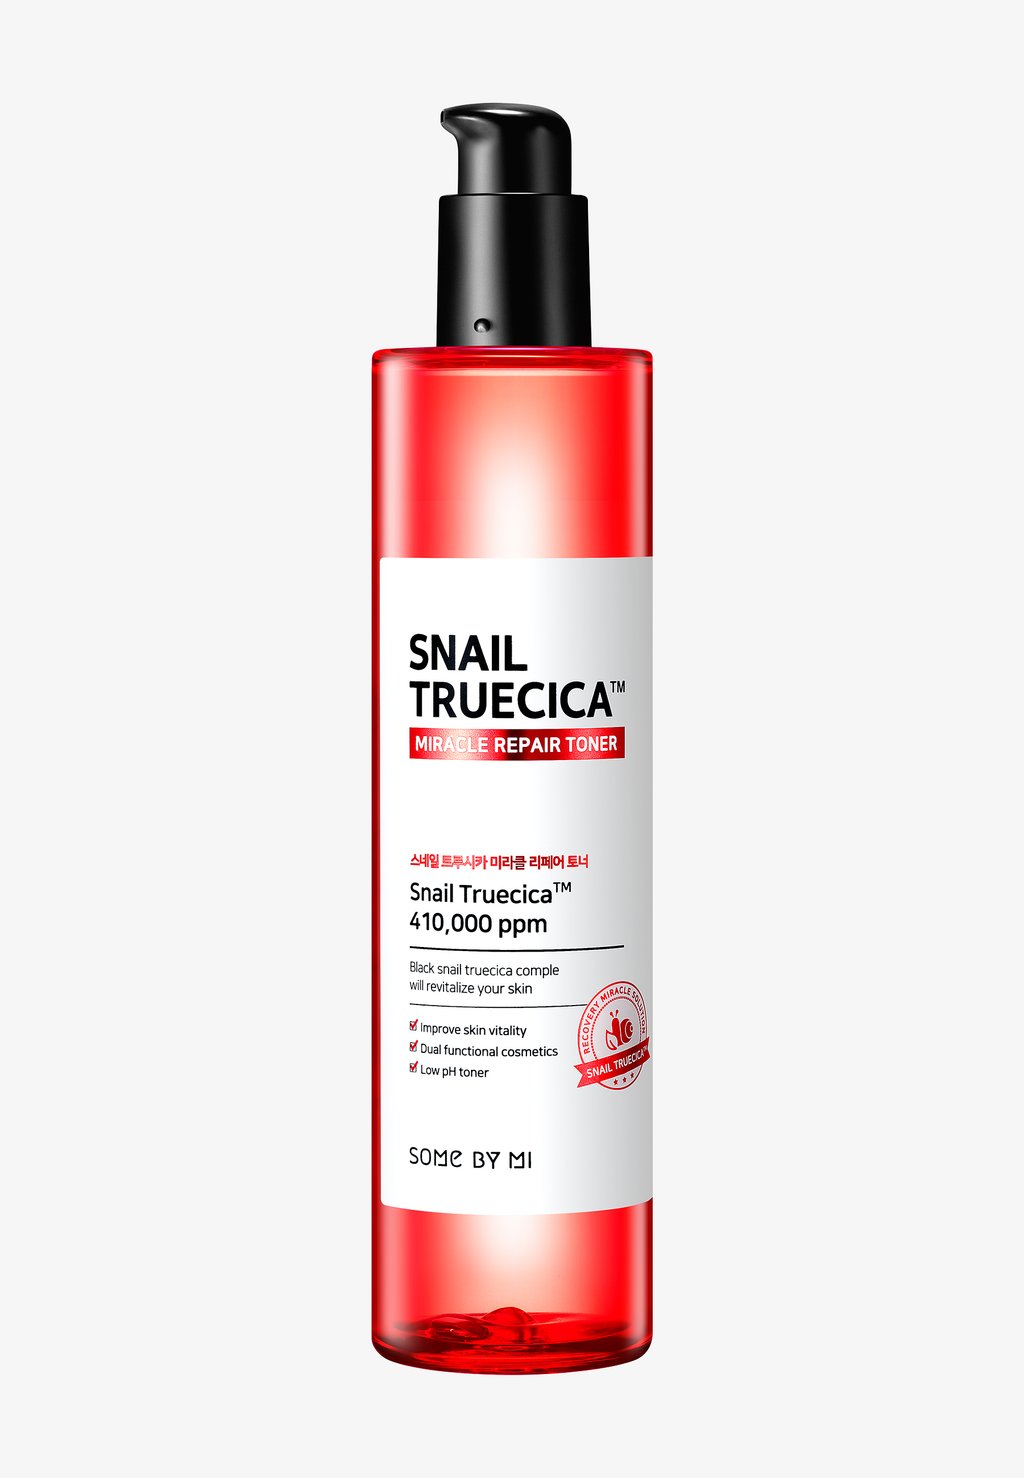 Ночные процедуры Snail Truecica Miracle Repair Toner SOME BY MI some by mi snail truecica miracle repair toner